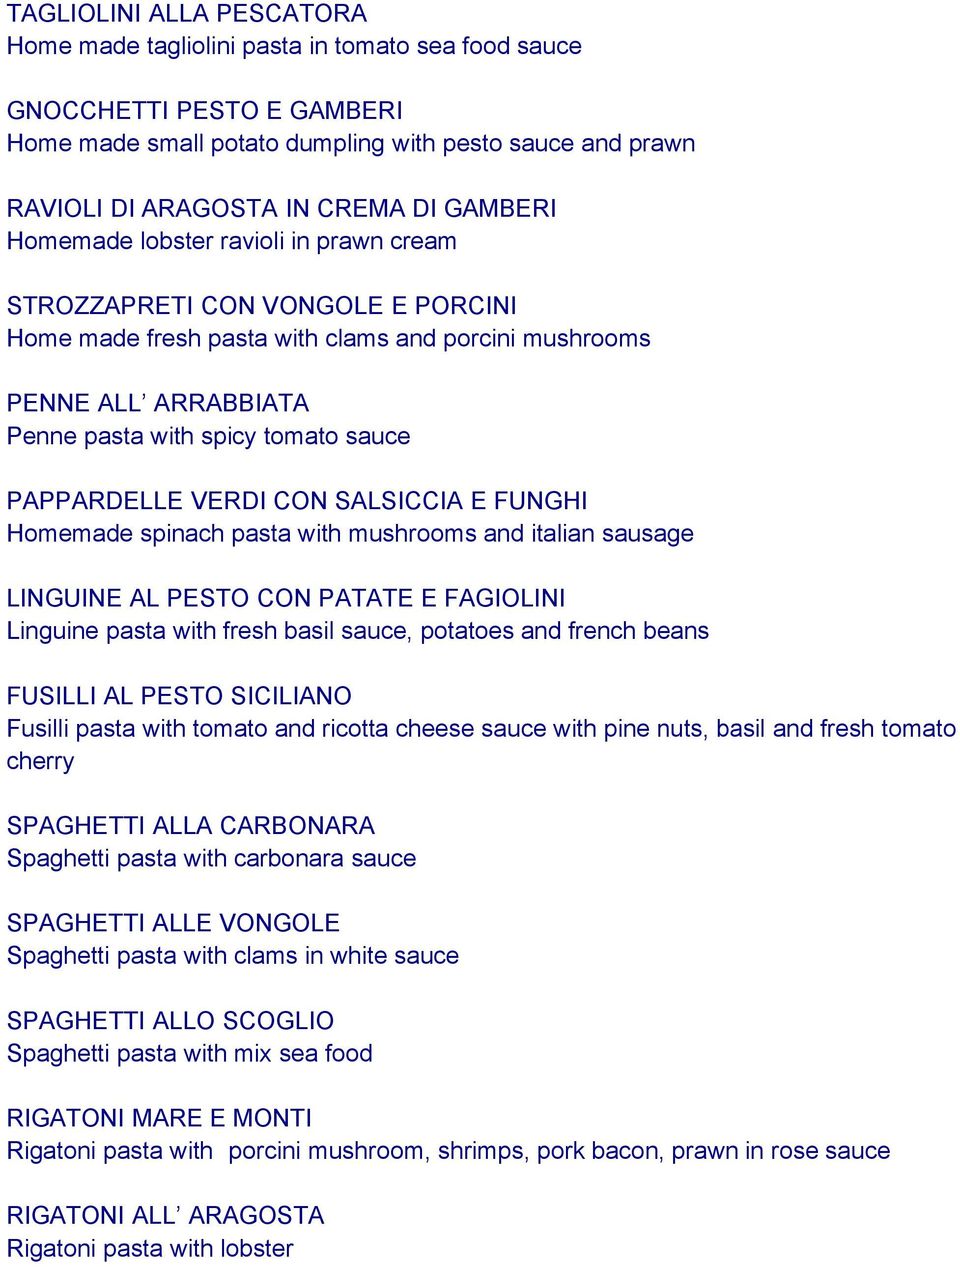 PAPPARDELLE VERDI CON SALSICCIA E FUNGHI Homemade spinach pasta with mushrooms and italian sausage LINGUINE AL PESTO CON PATATE E FAGIOLINI Linguine pasta with fresh basil sauce, potatoes and french